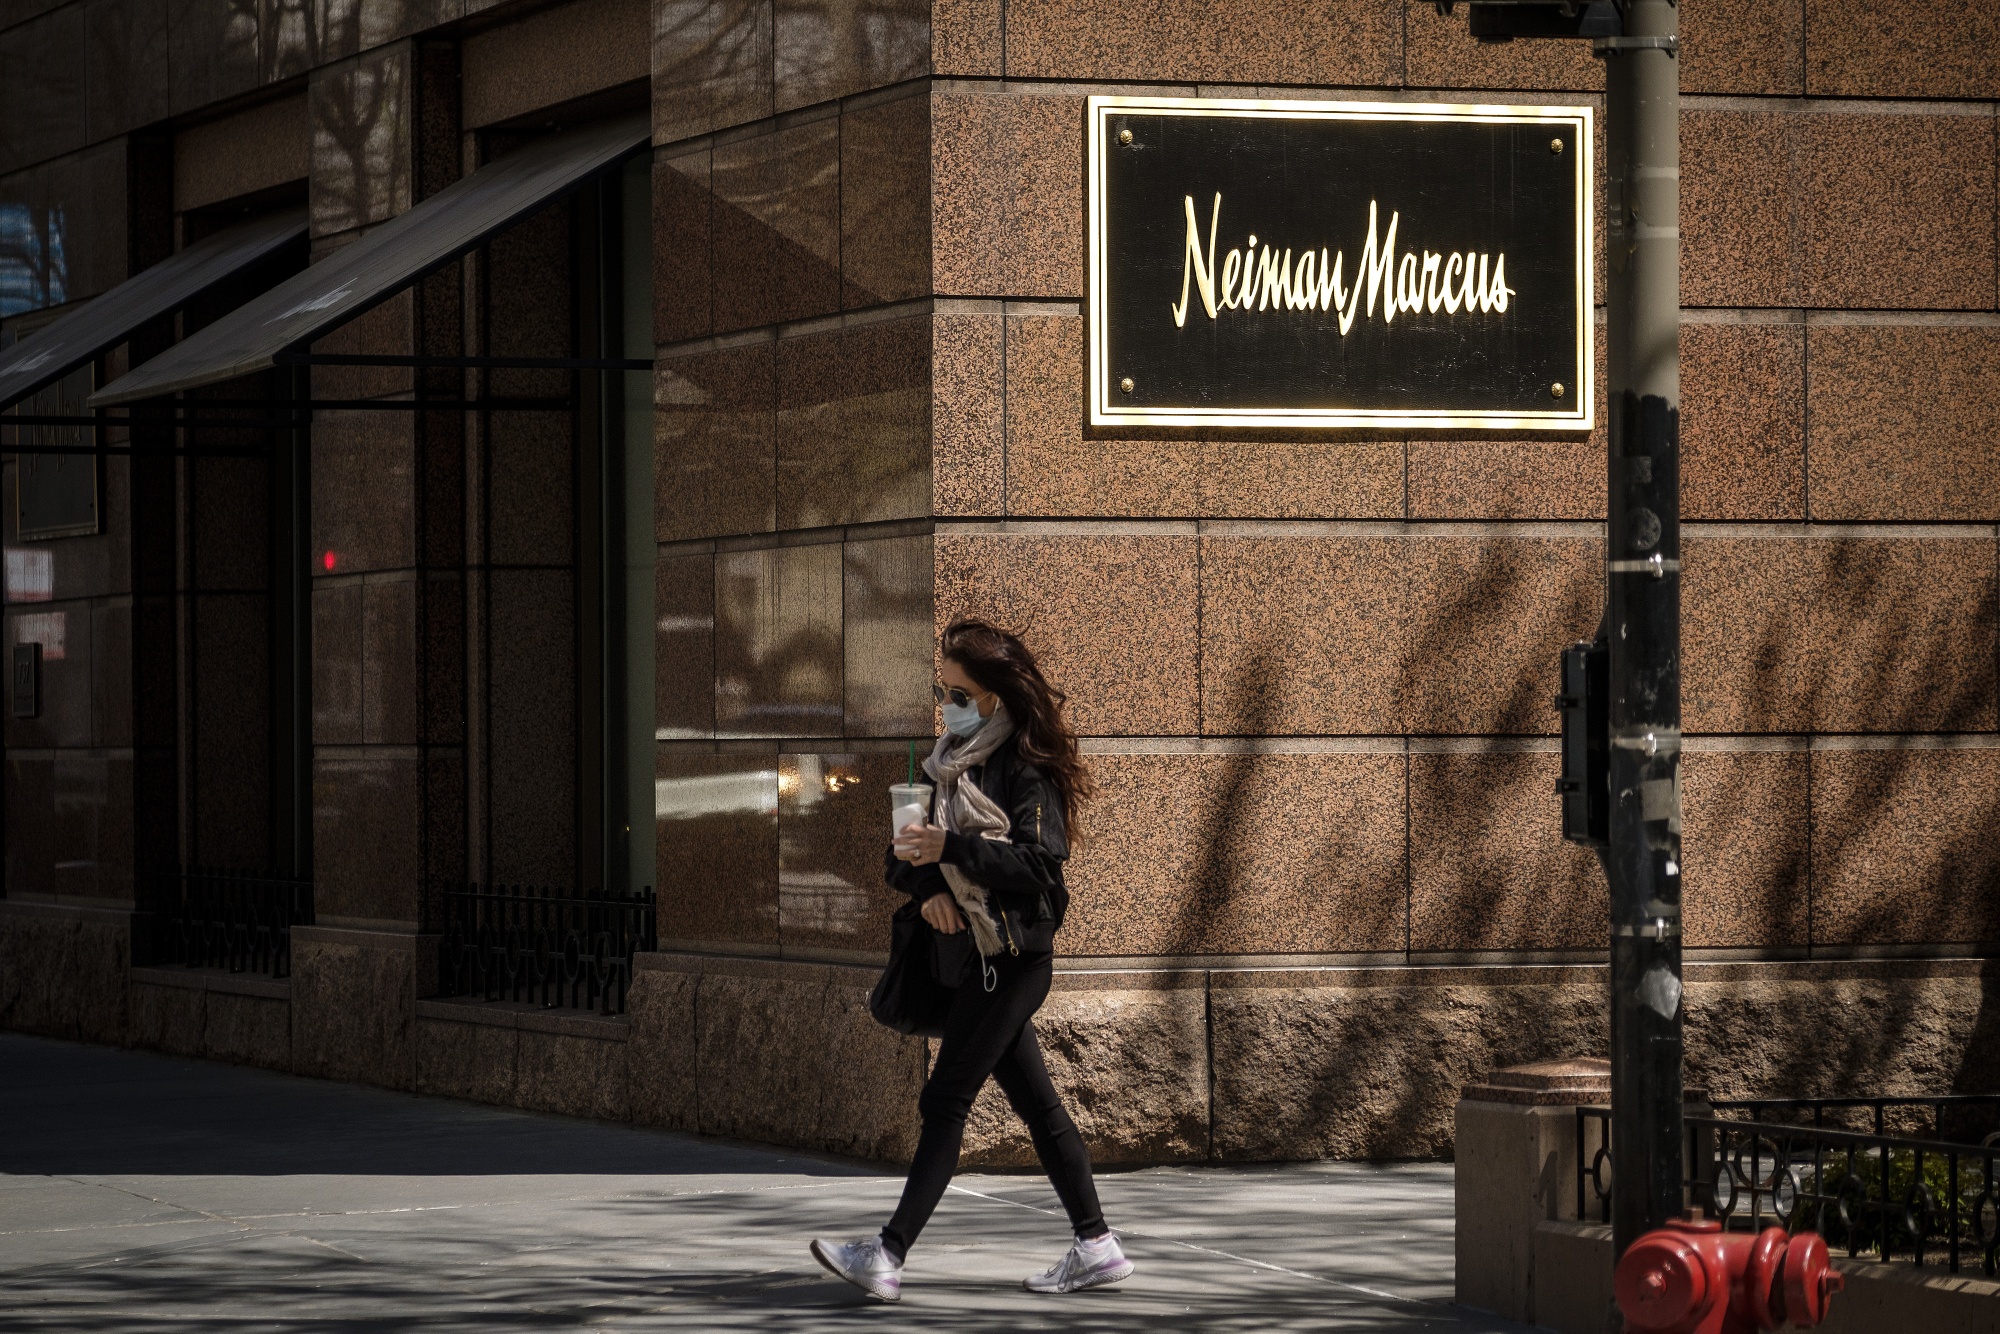 Neiman Marcus Group